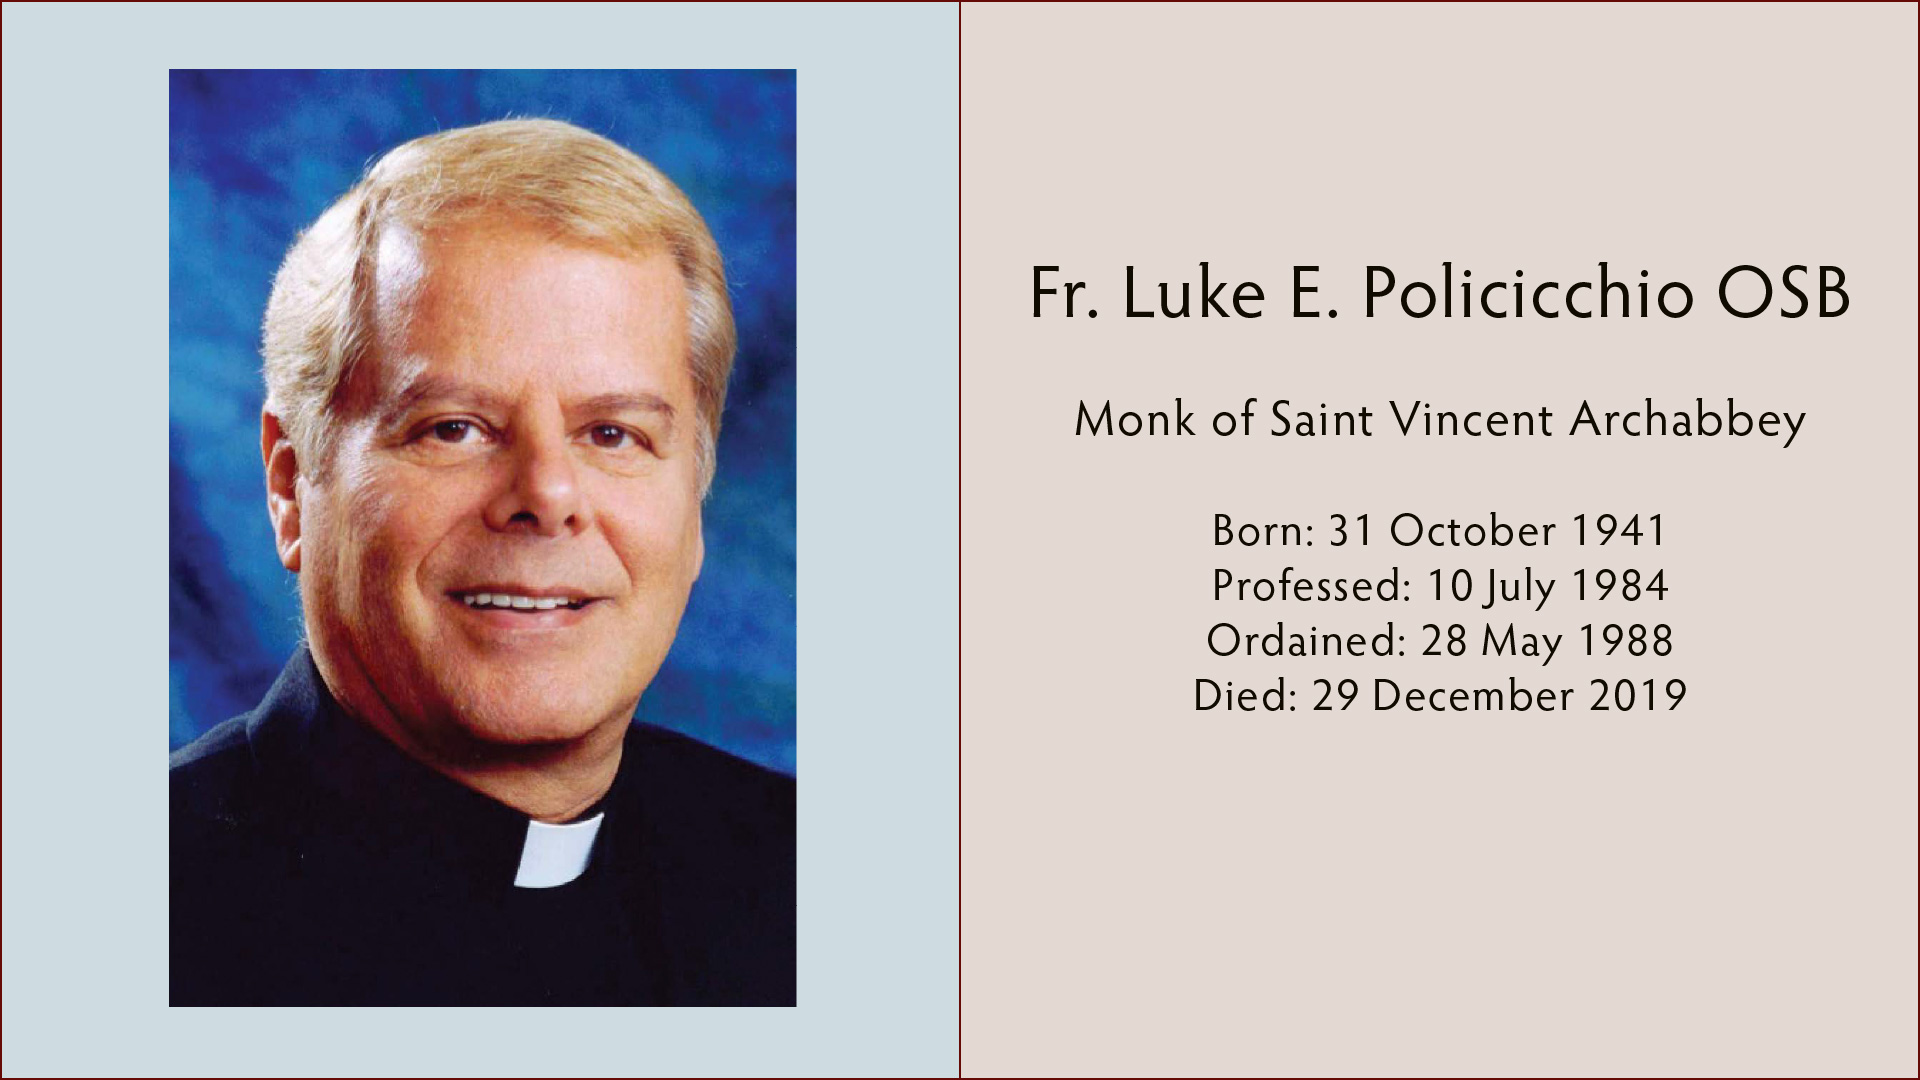 portrait : Father Luke E. Policicchio OSB